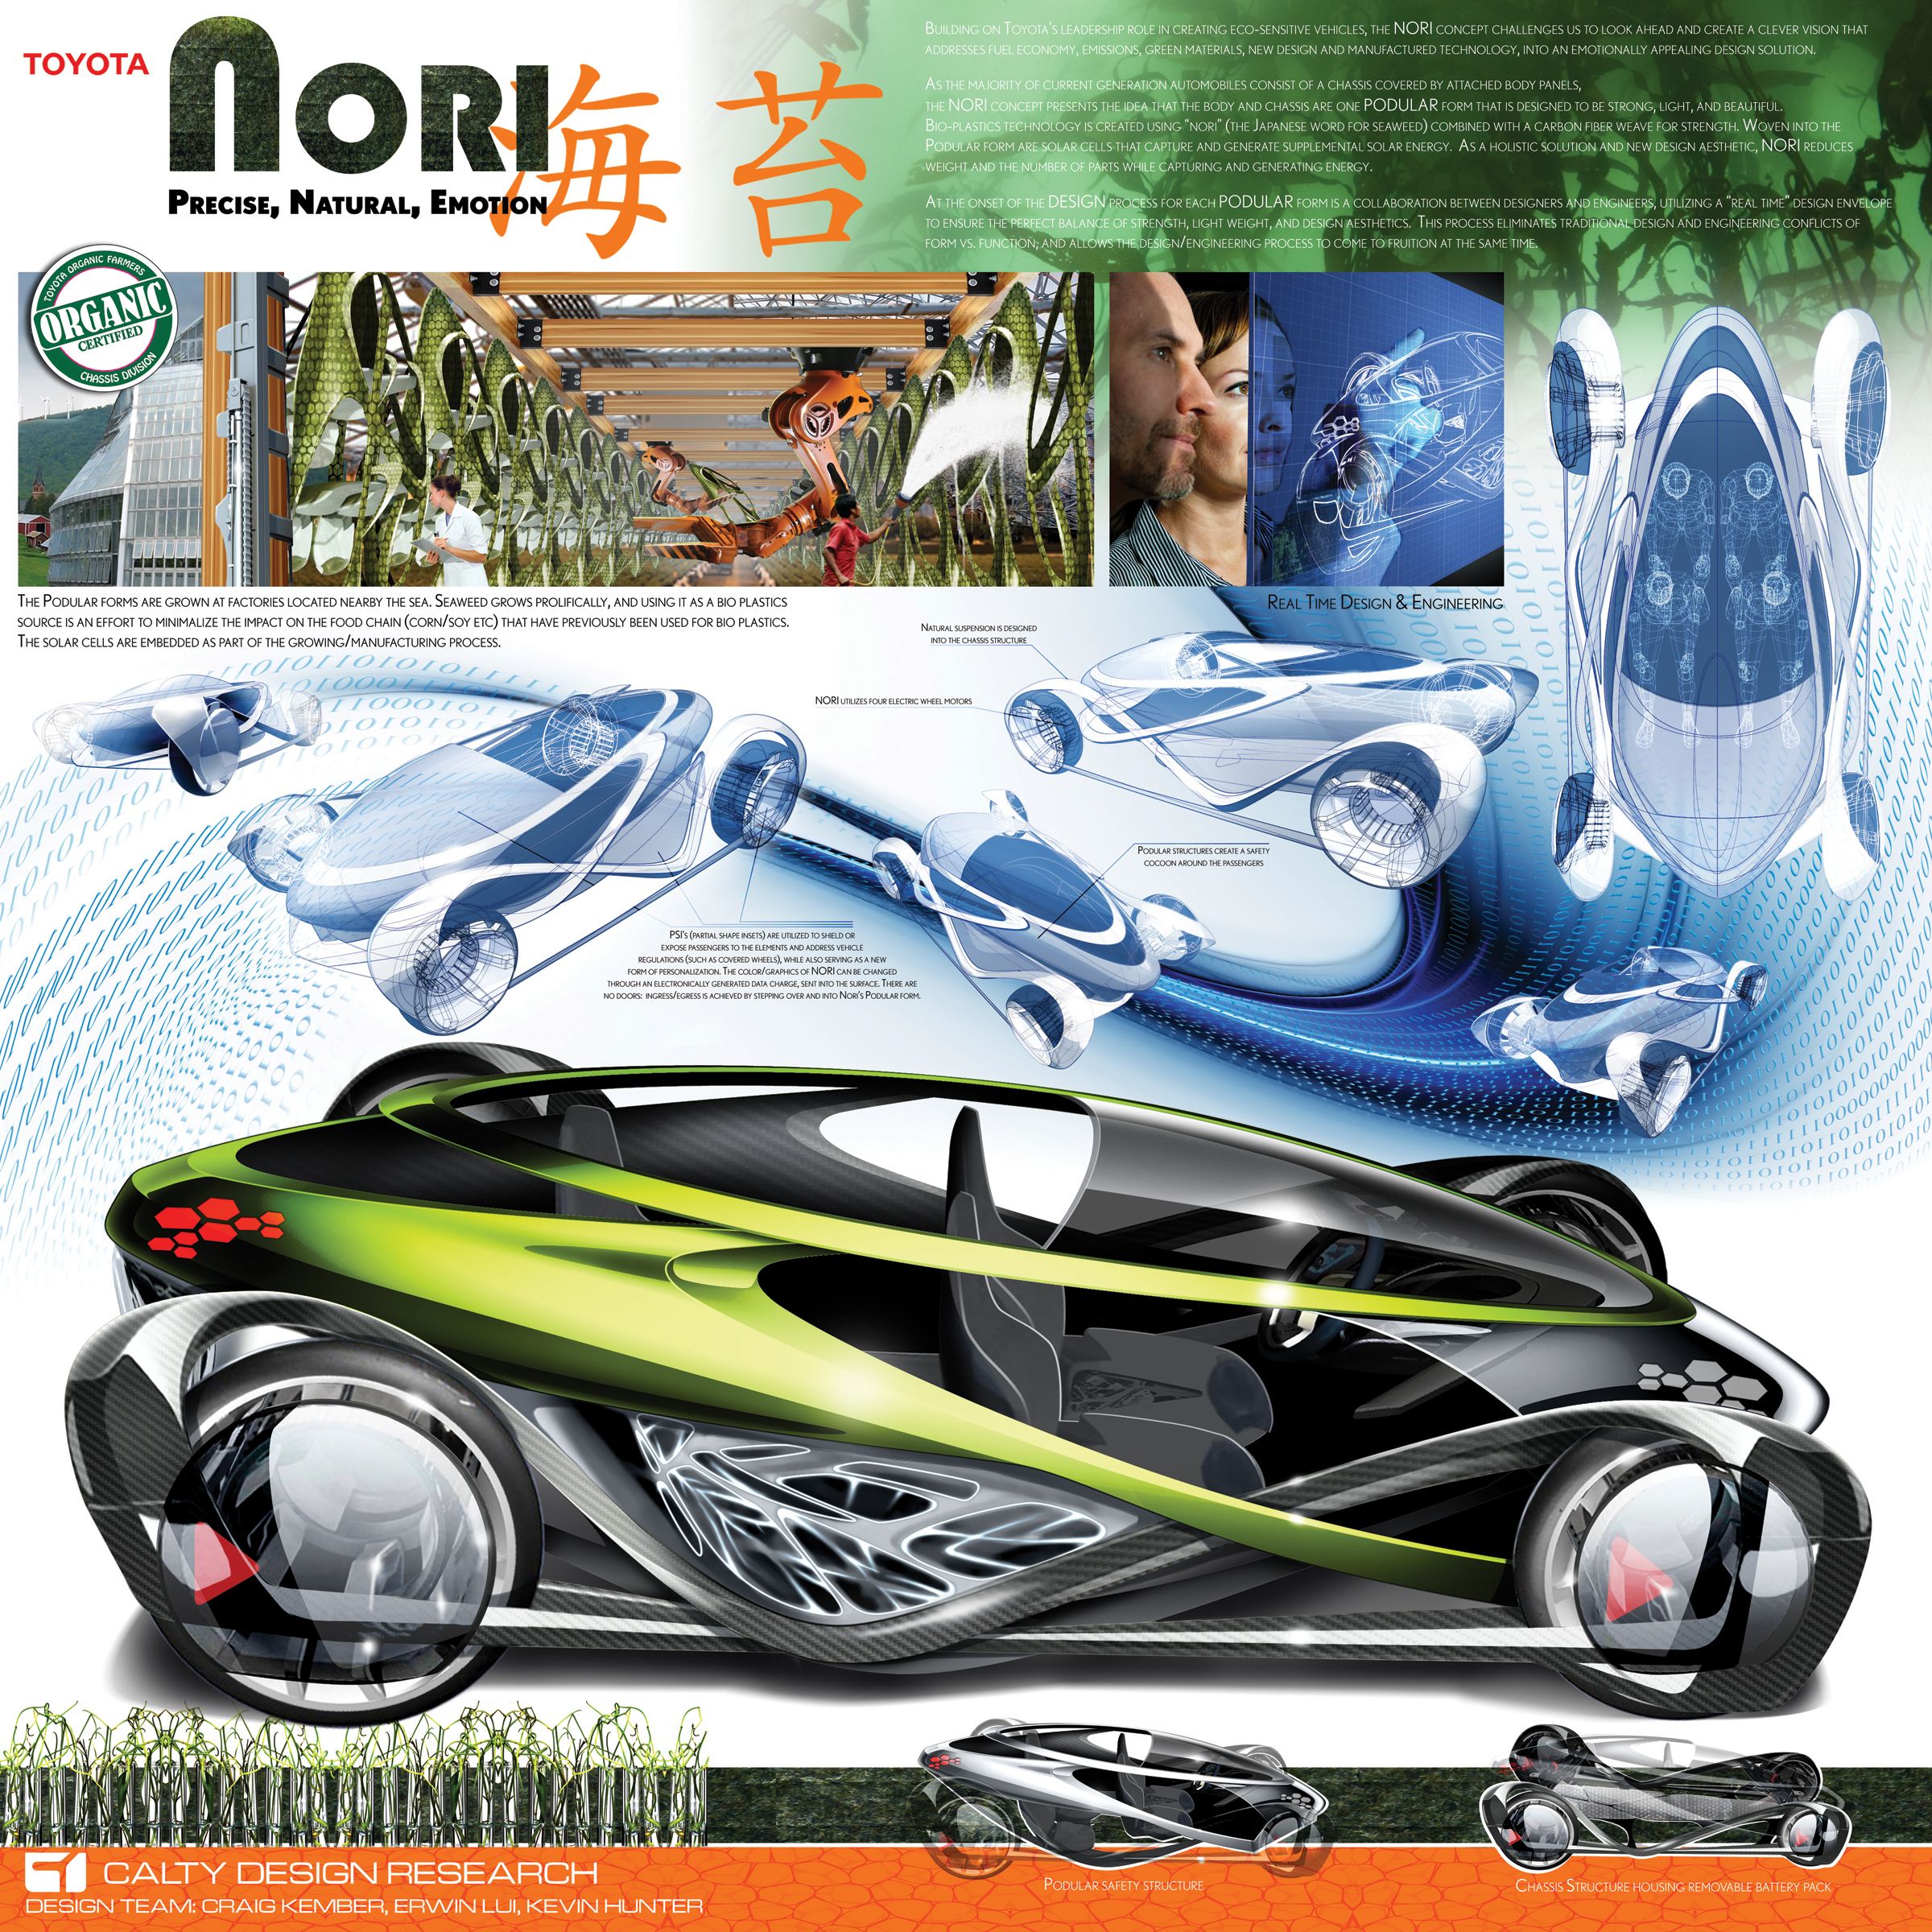 2010 Toyota NORI Concept